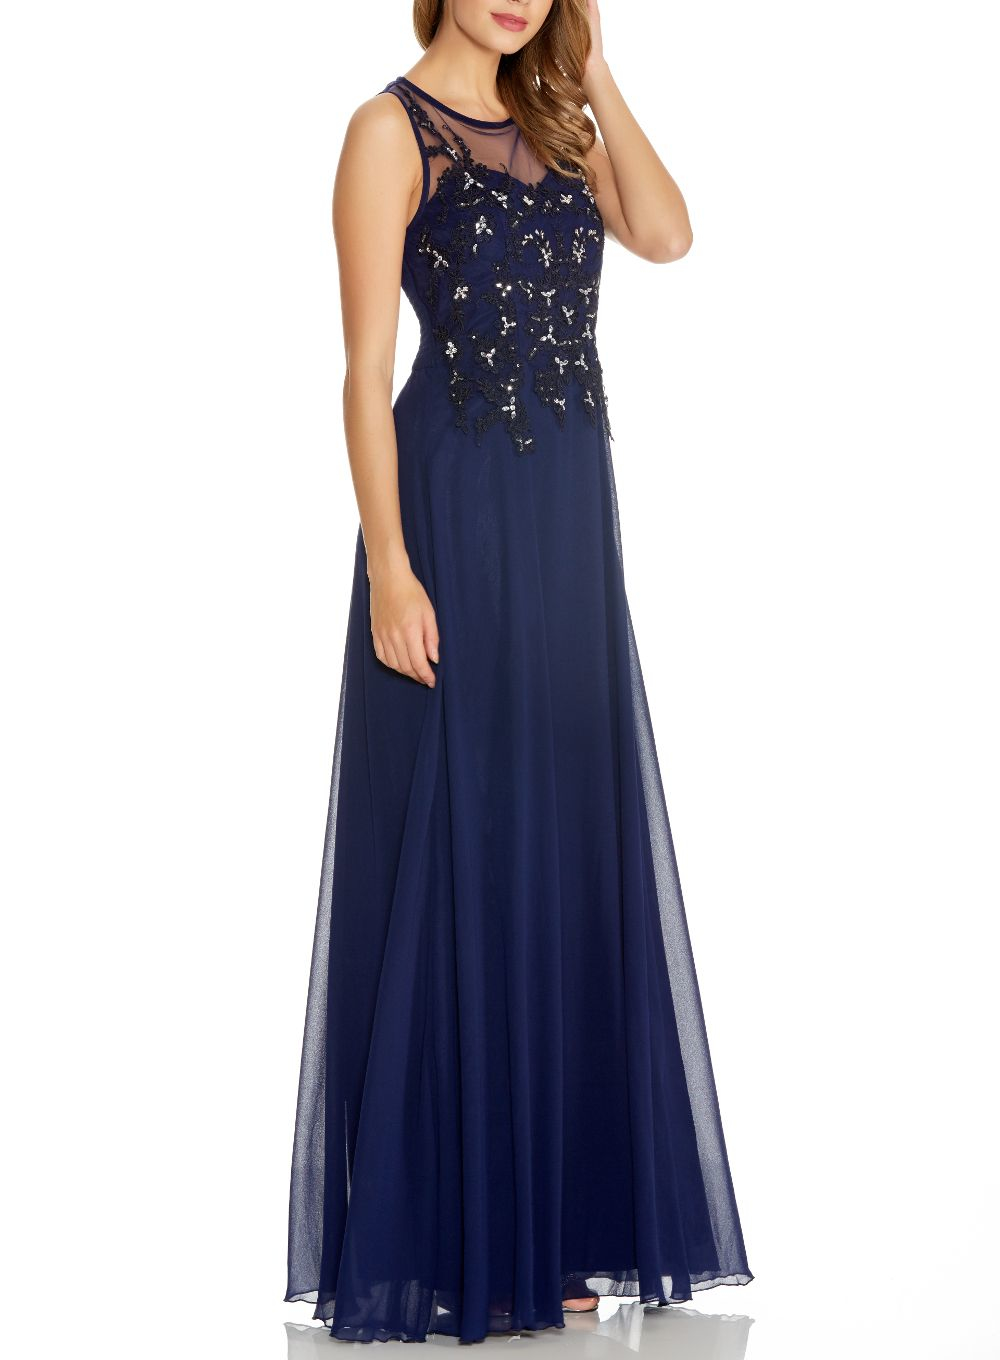 quiz navy blue prom dress